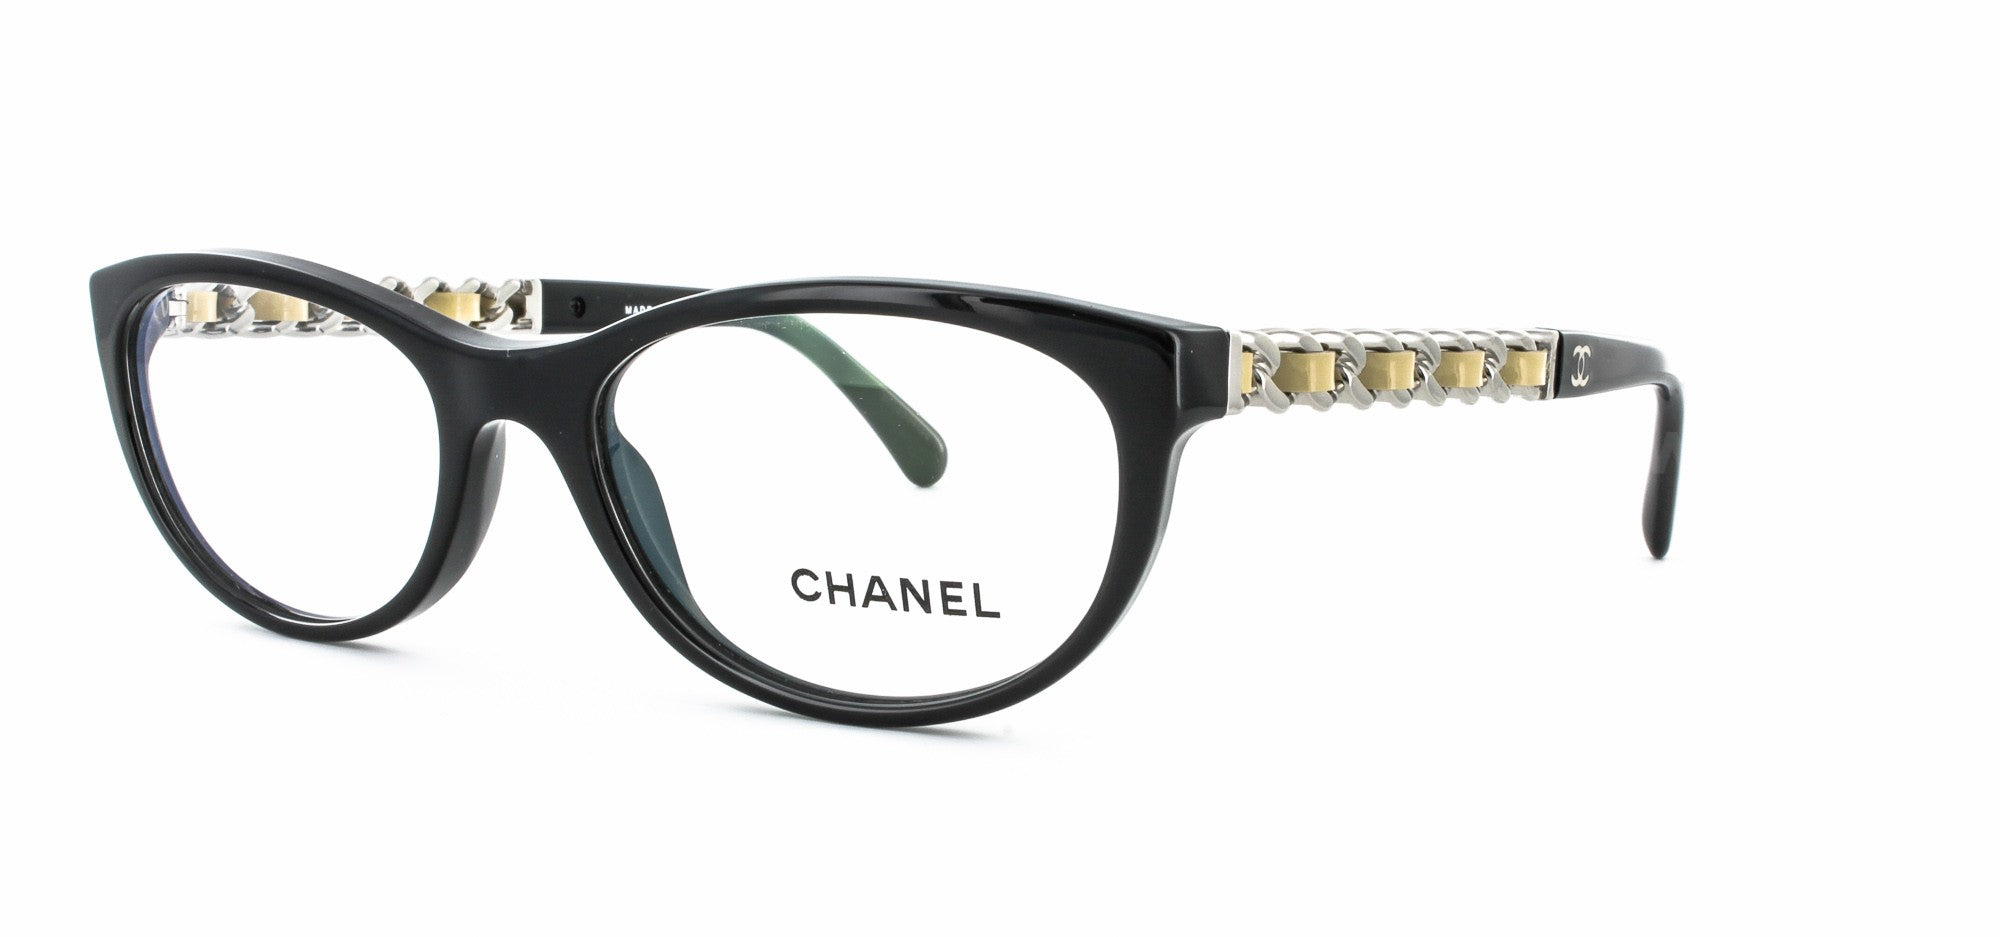 The New Season Chanel Glasses: Chain Collection – Fashion Eyewear